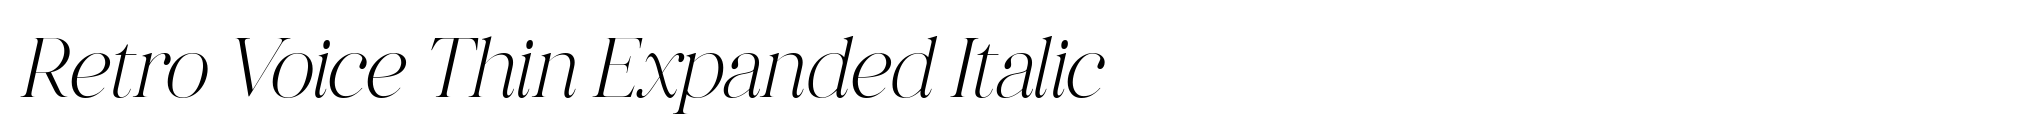 Retro Voice Thin Expanded Italic image